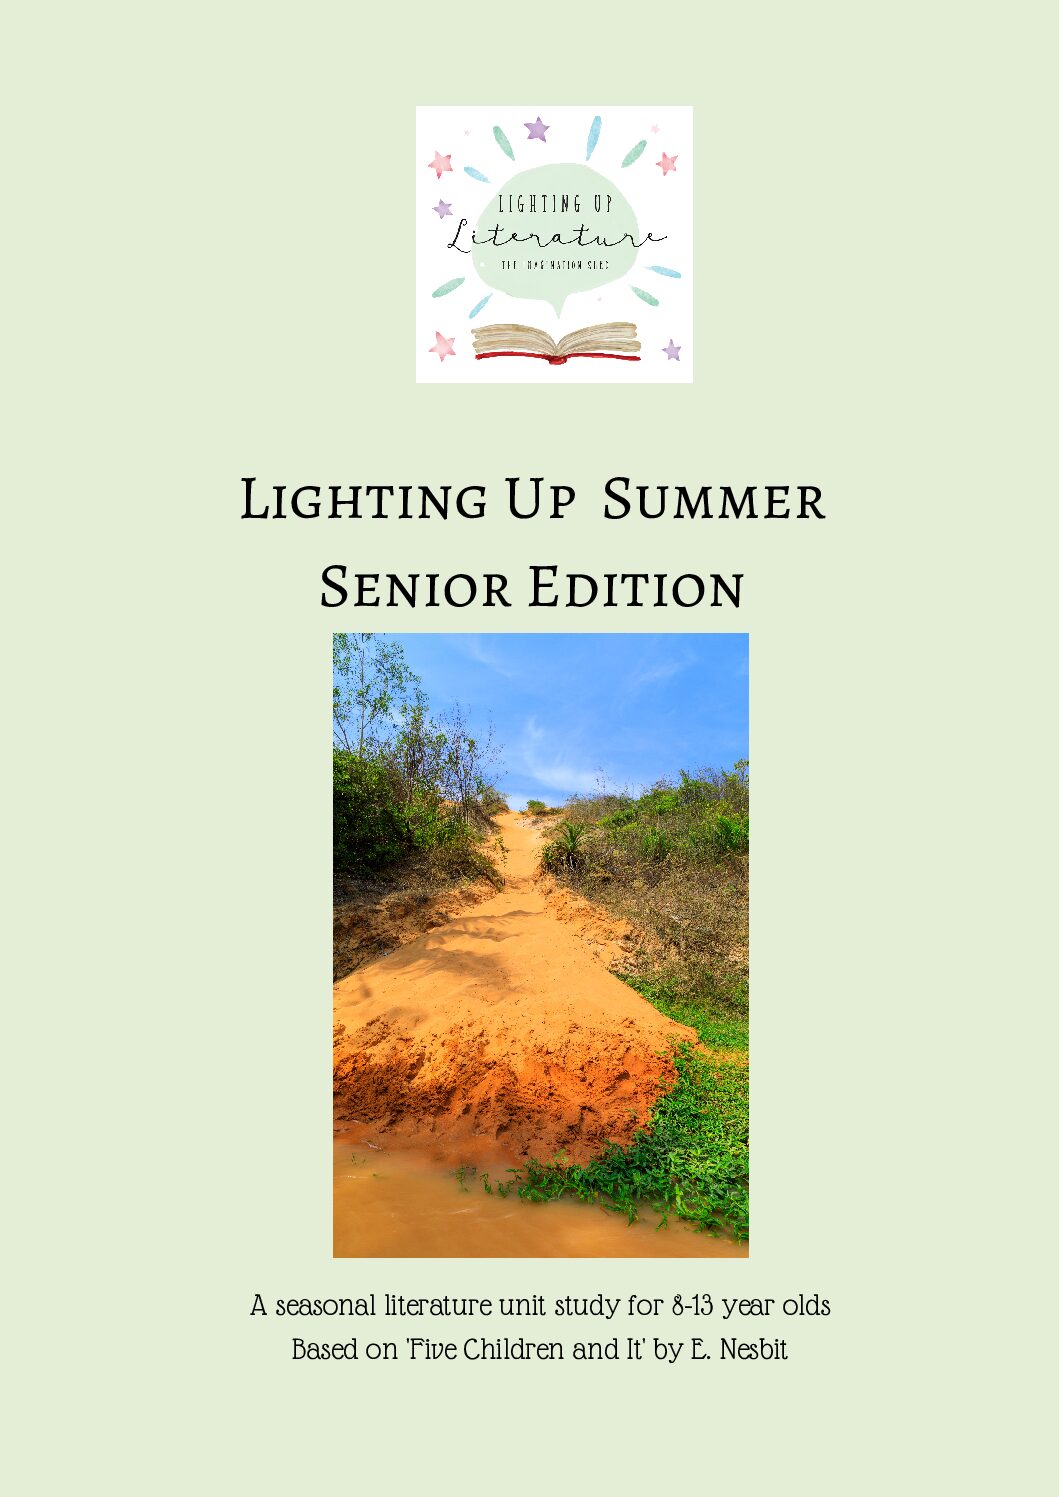 Lighting Up Summer (Senior Edition for 8-13s): Five Children & It